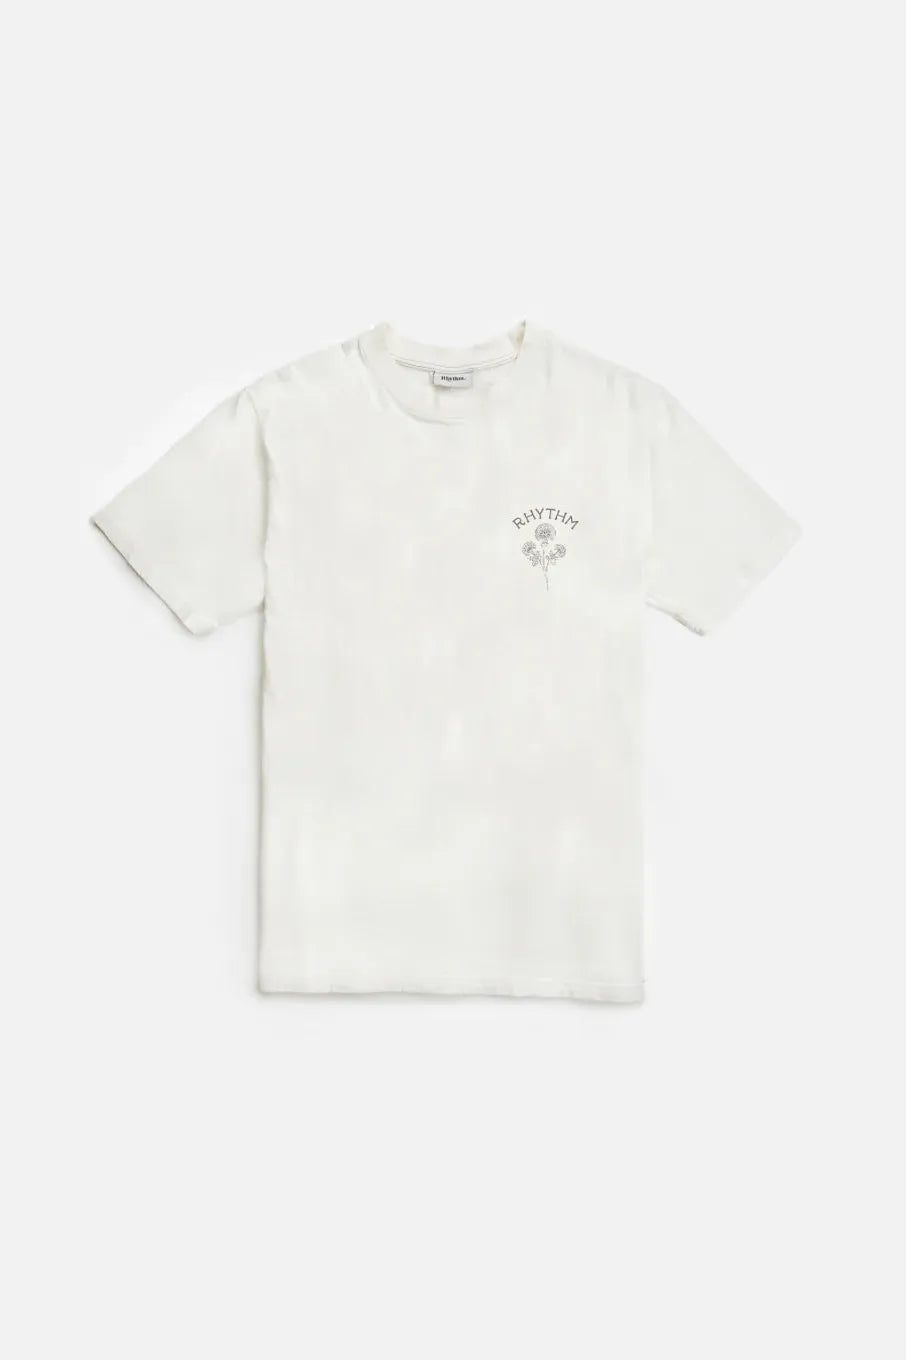 Wish ss t-shirt- white - Fire Sale Item